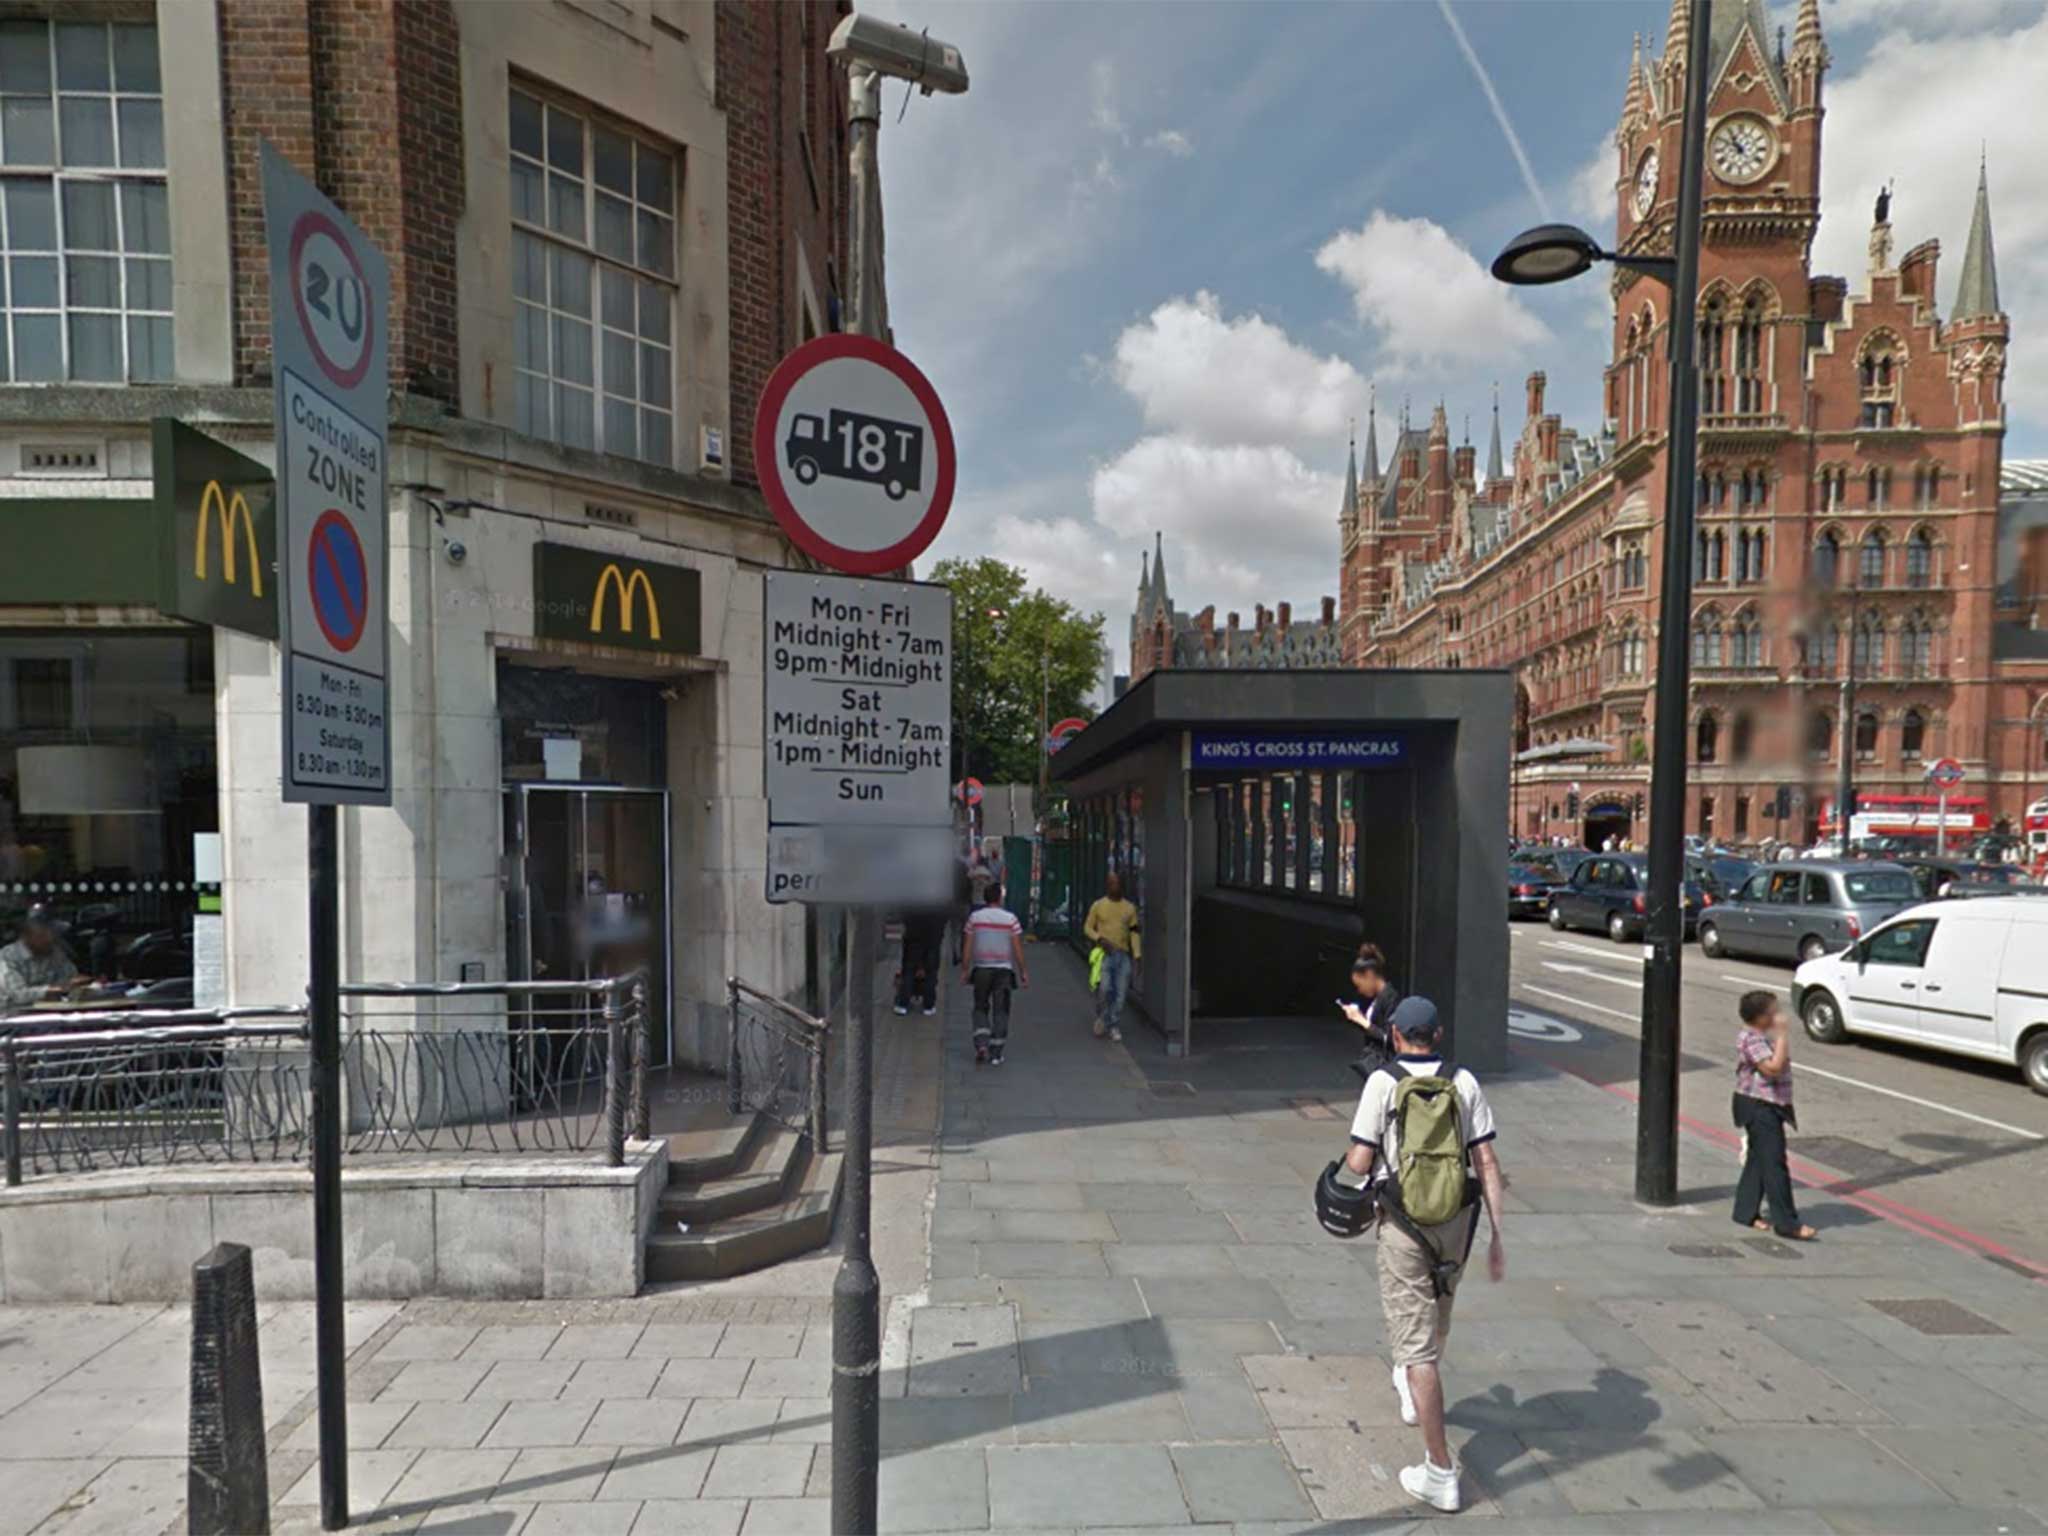 A McDonalds near Kings Cross Station